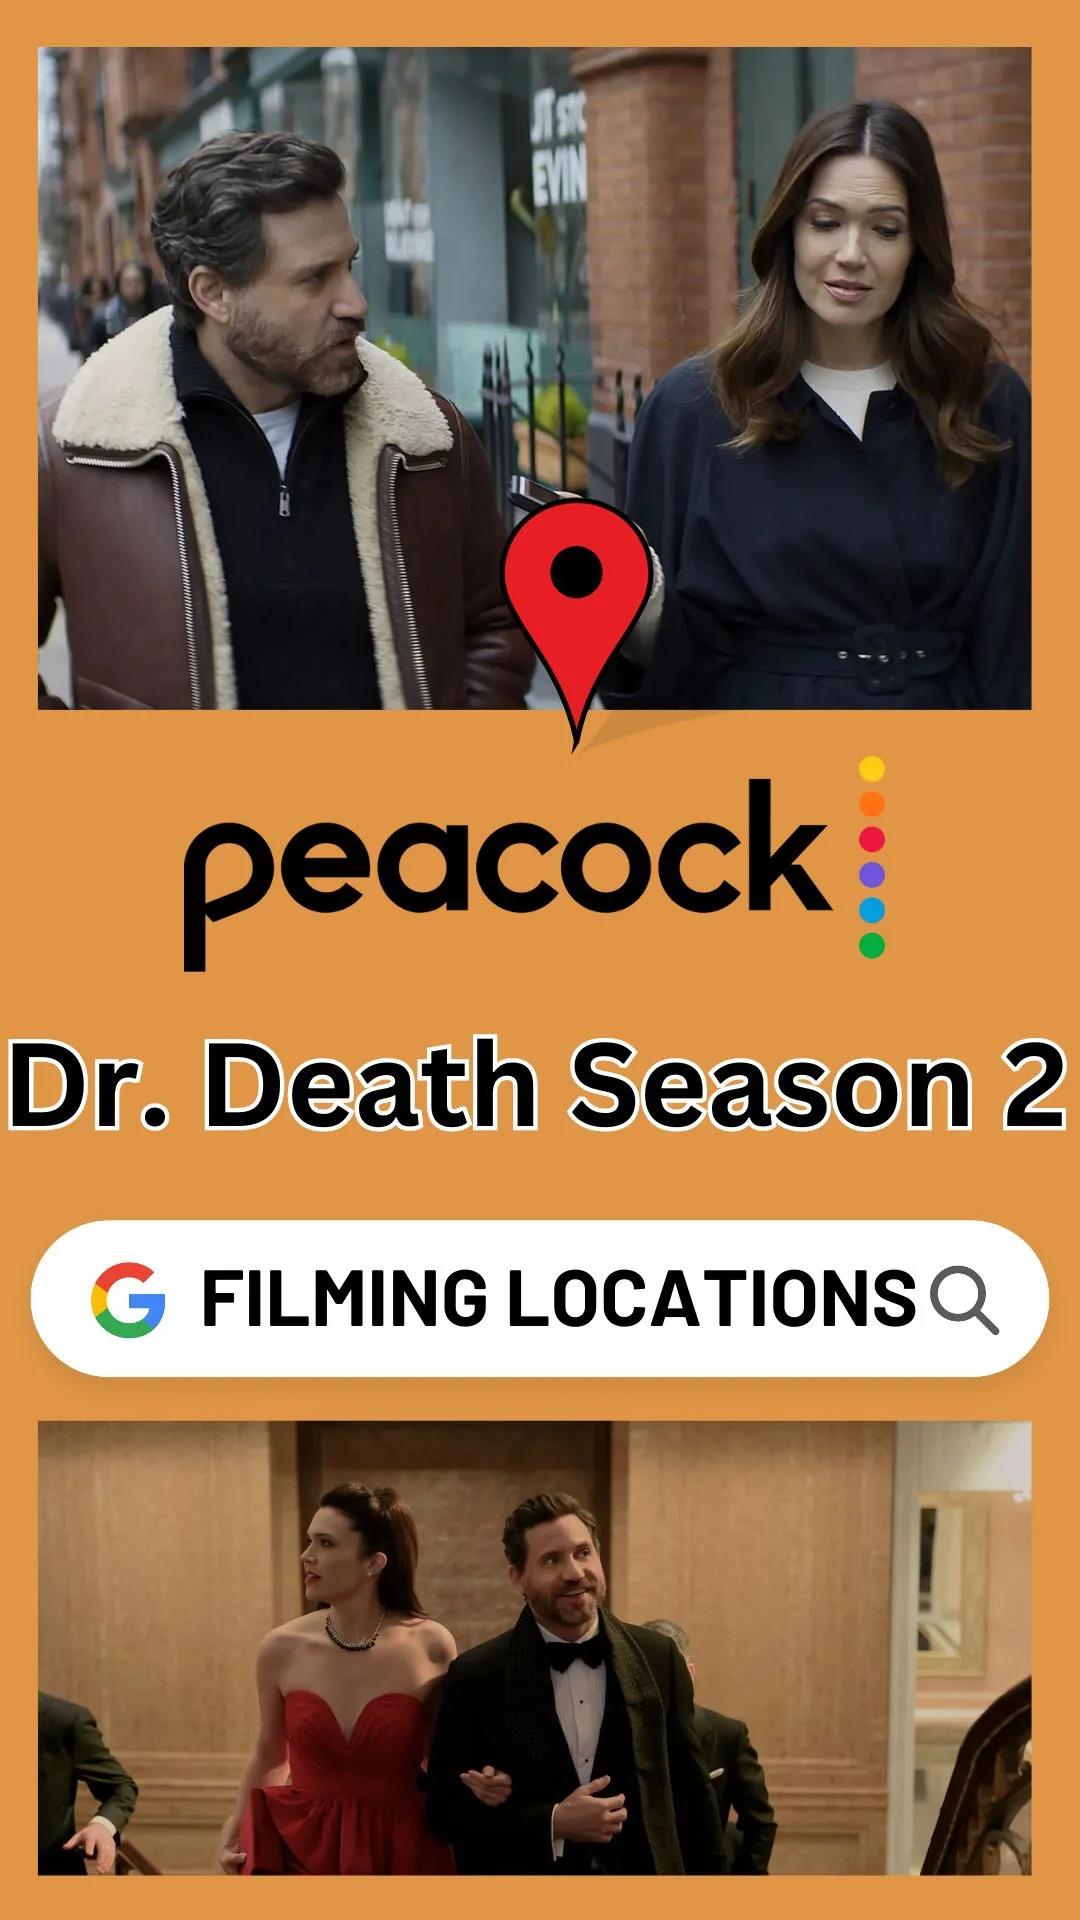 Dr. Death Season 2 Filming Locations